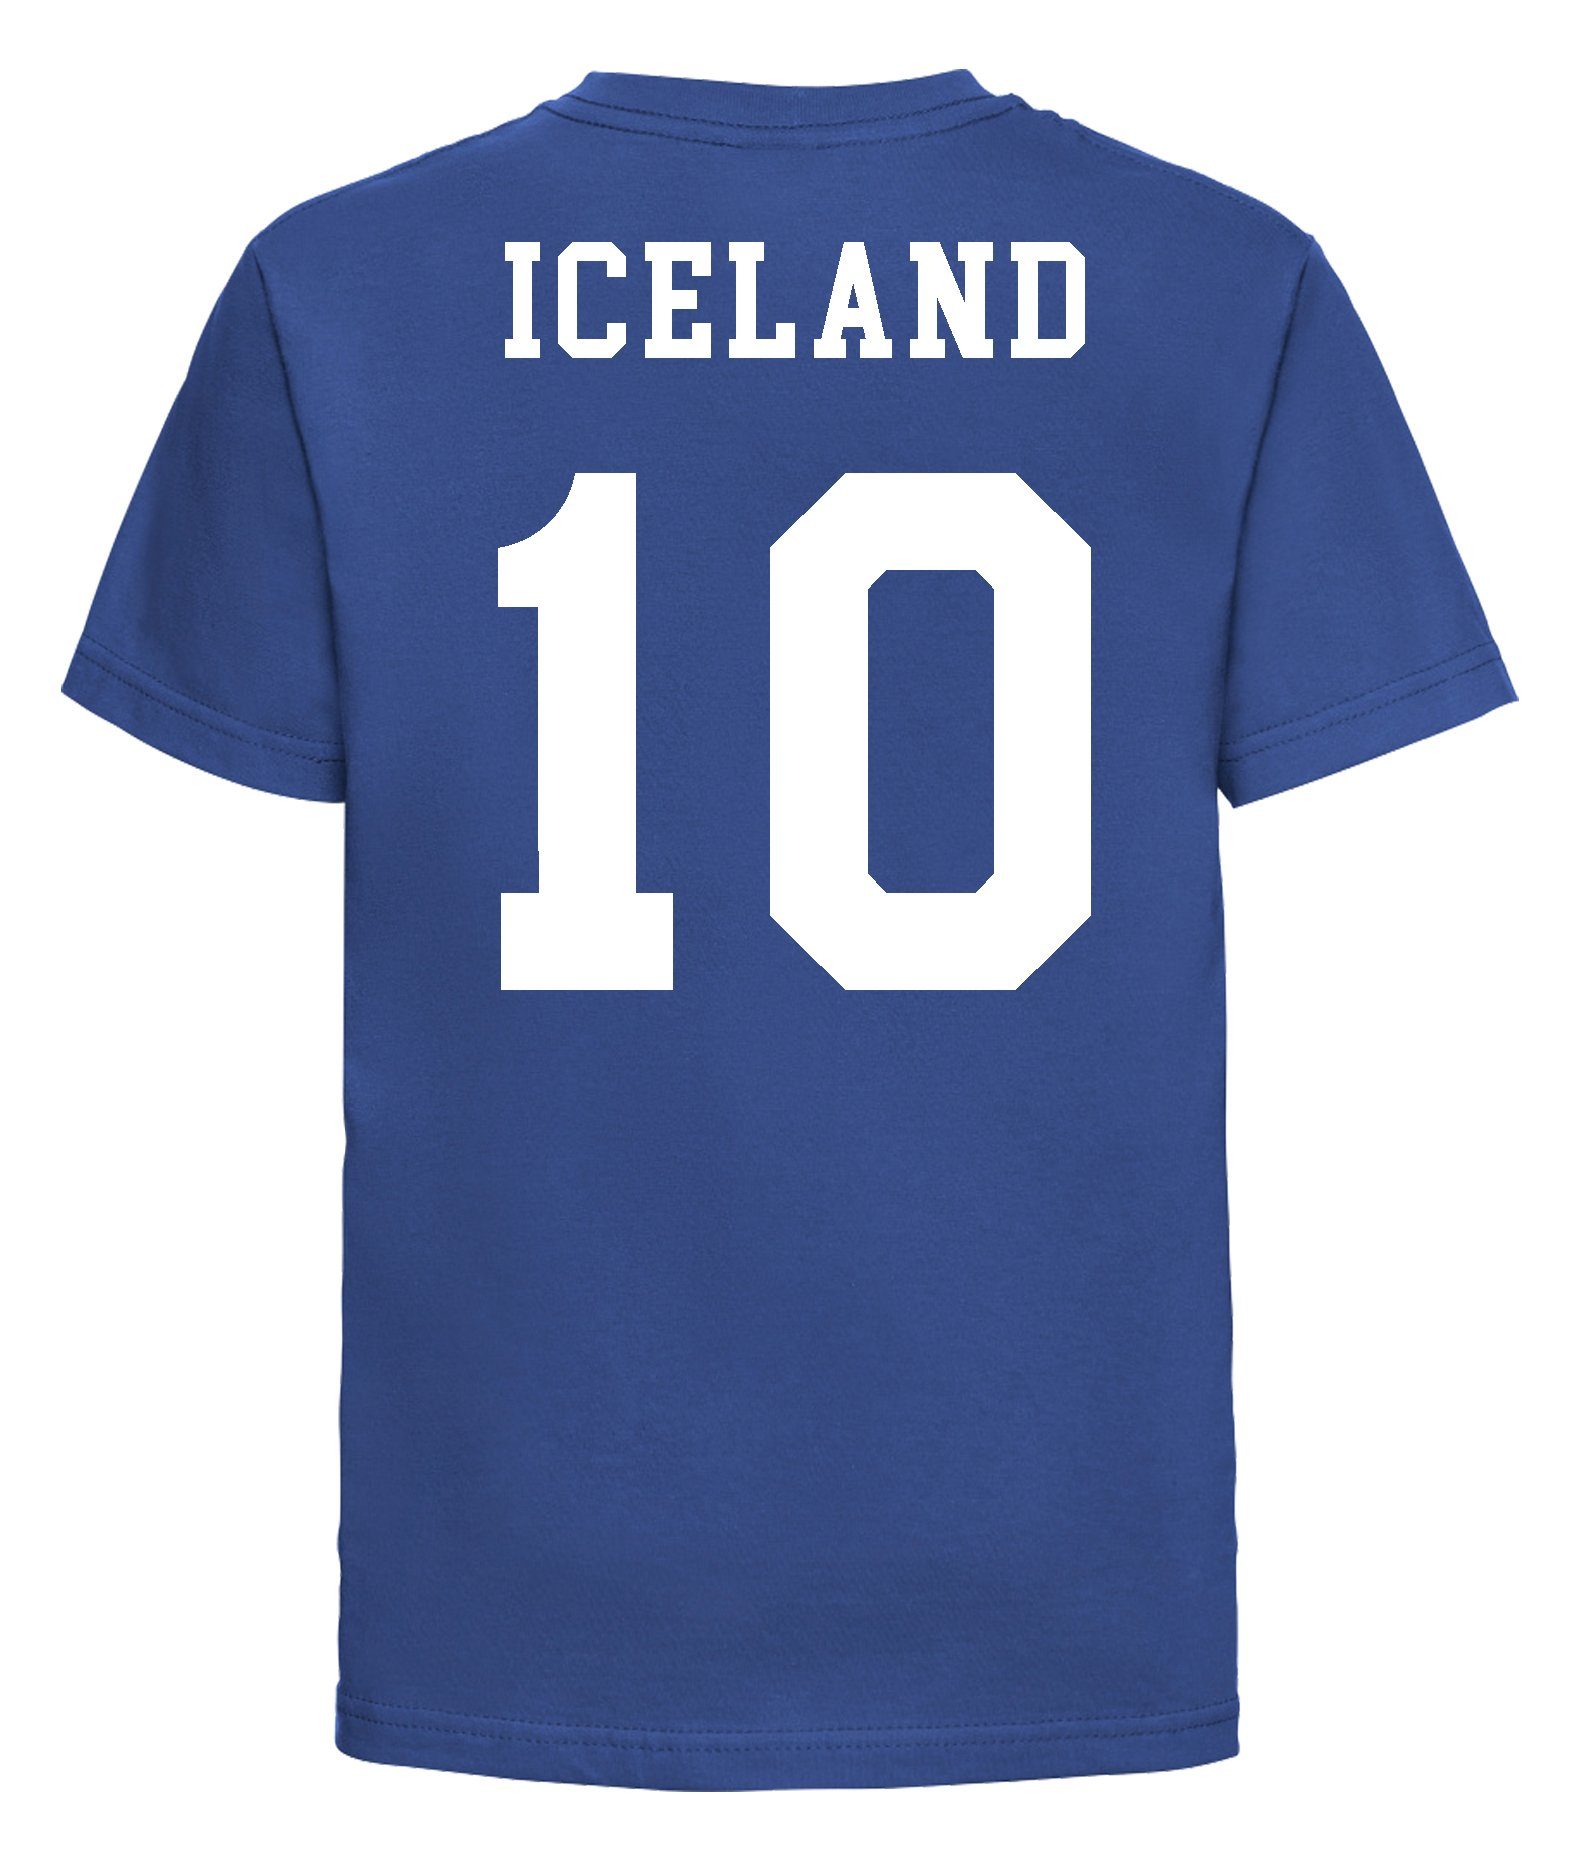 Kinder T-Shirt im Youth Island Trikot Designz trendigem Motiv Look Fußball T-Shirt mit